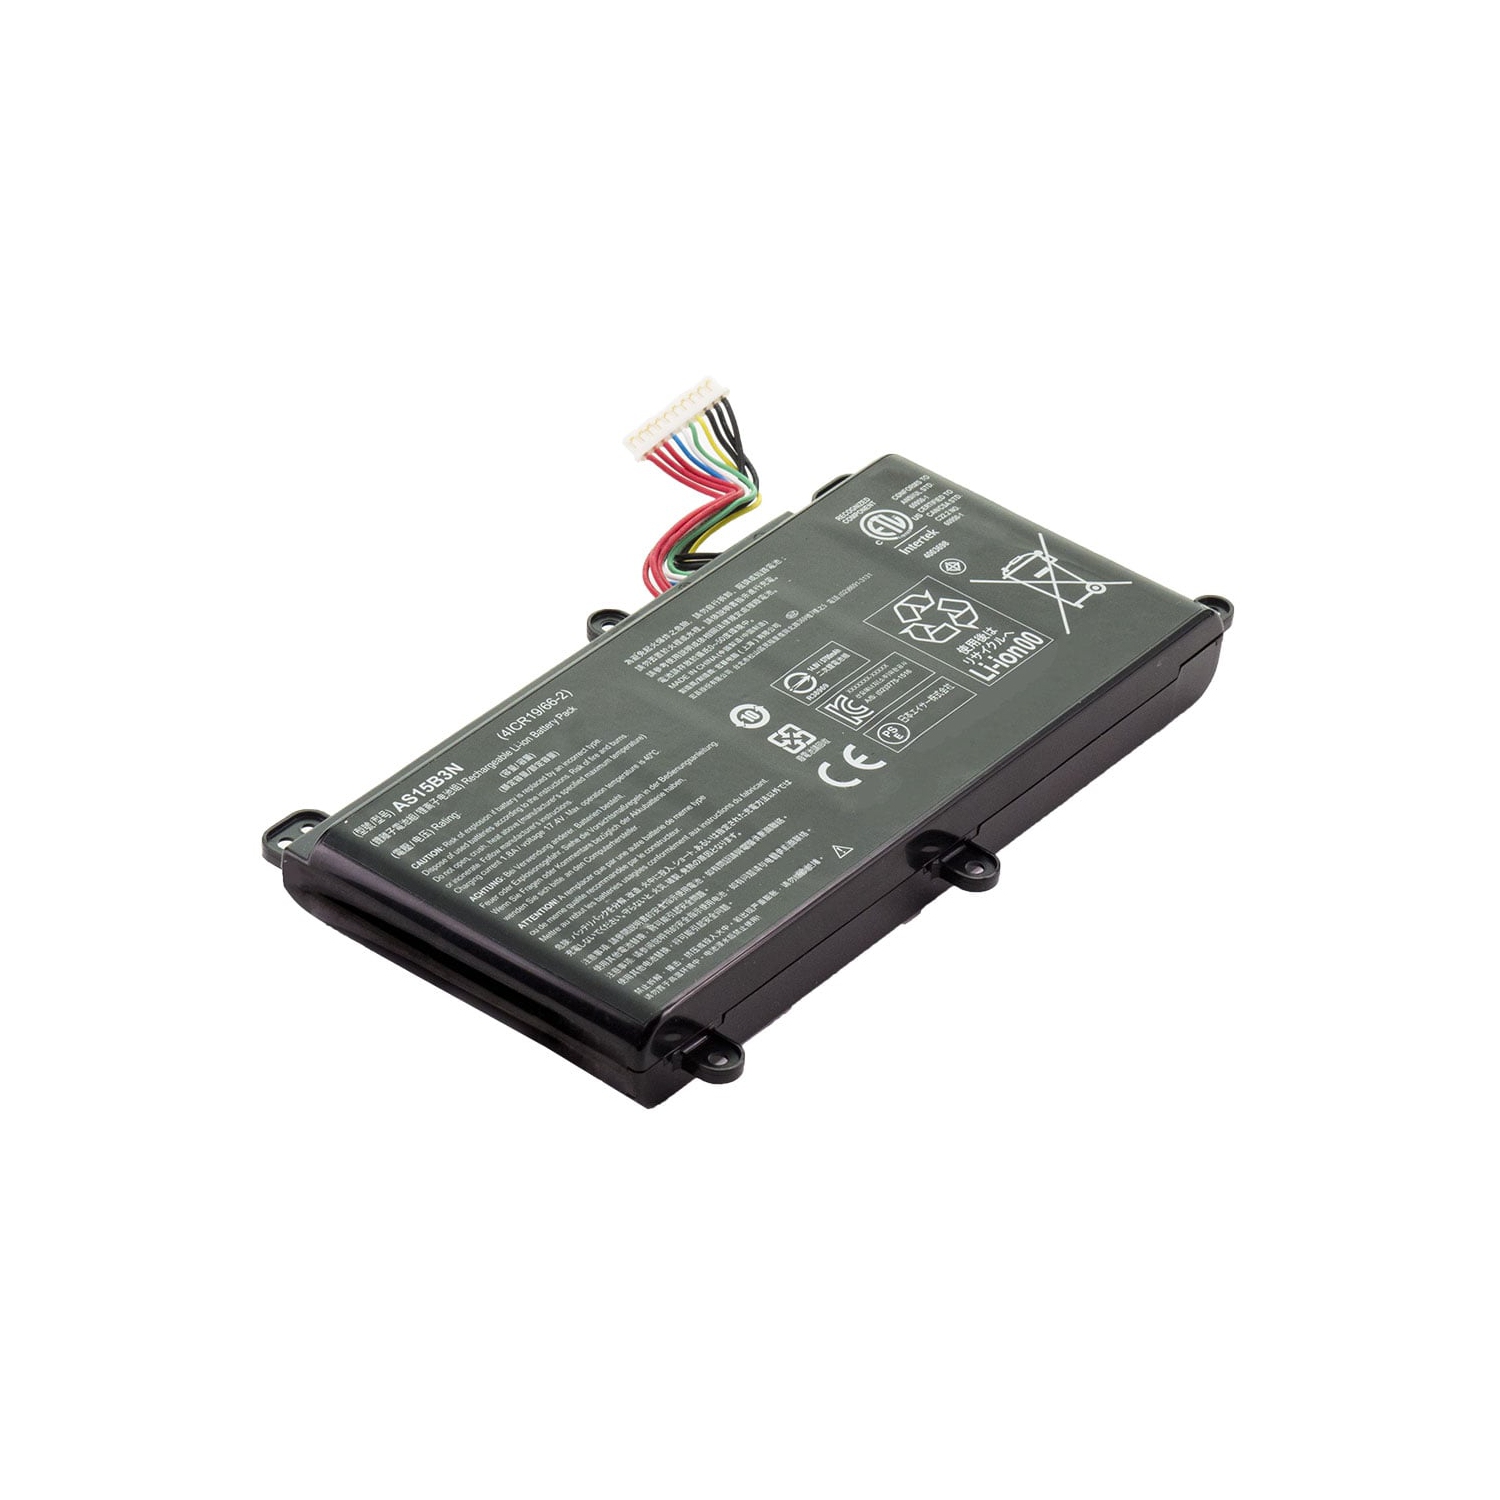 BATTDEPOT NEW Laptop Battery for Acer Predator 15 G9-593-735L AS15B3N KT.00803.004 KT.00803.005